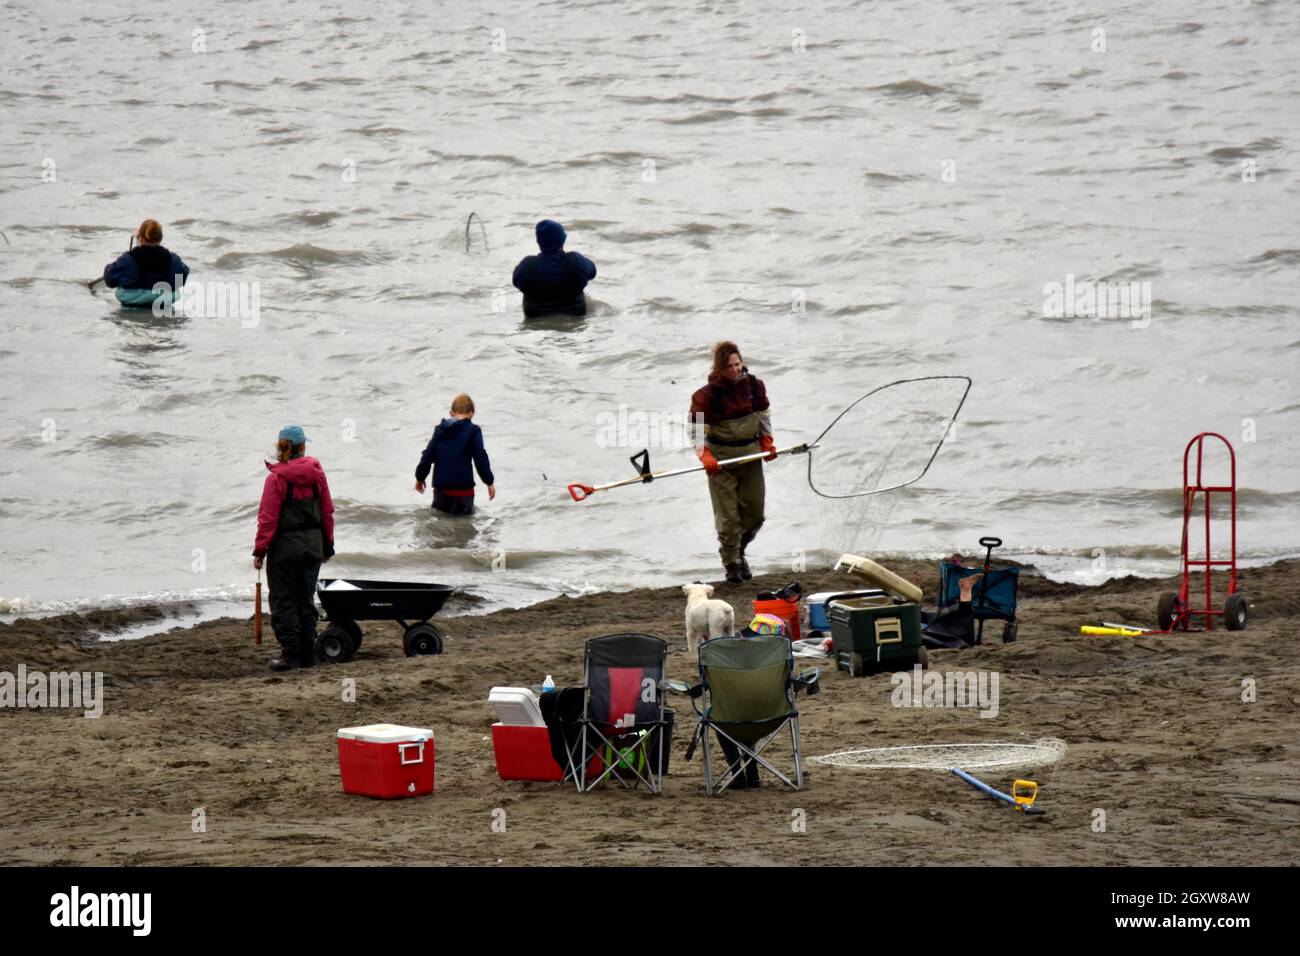 Während der Lachslaufsaison ist das Fischen an der Mündung des Kenai River, Kenai, Alaska, USA, beliebt Stockfoto